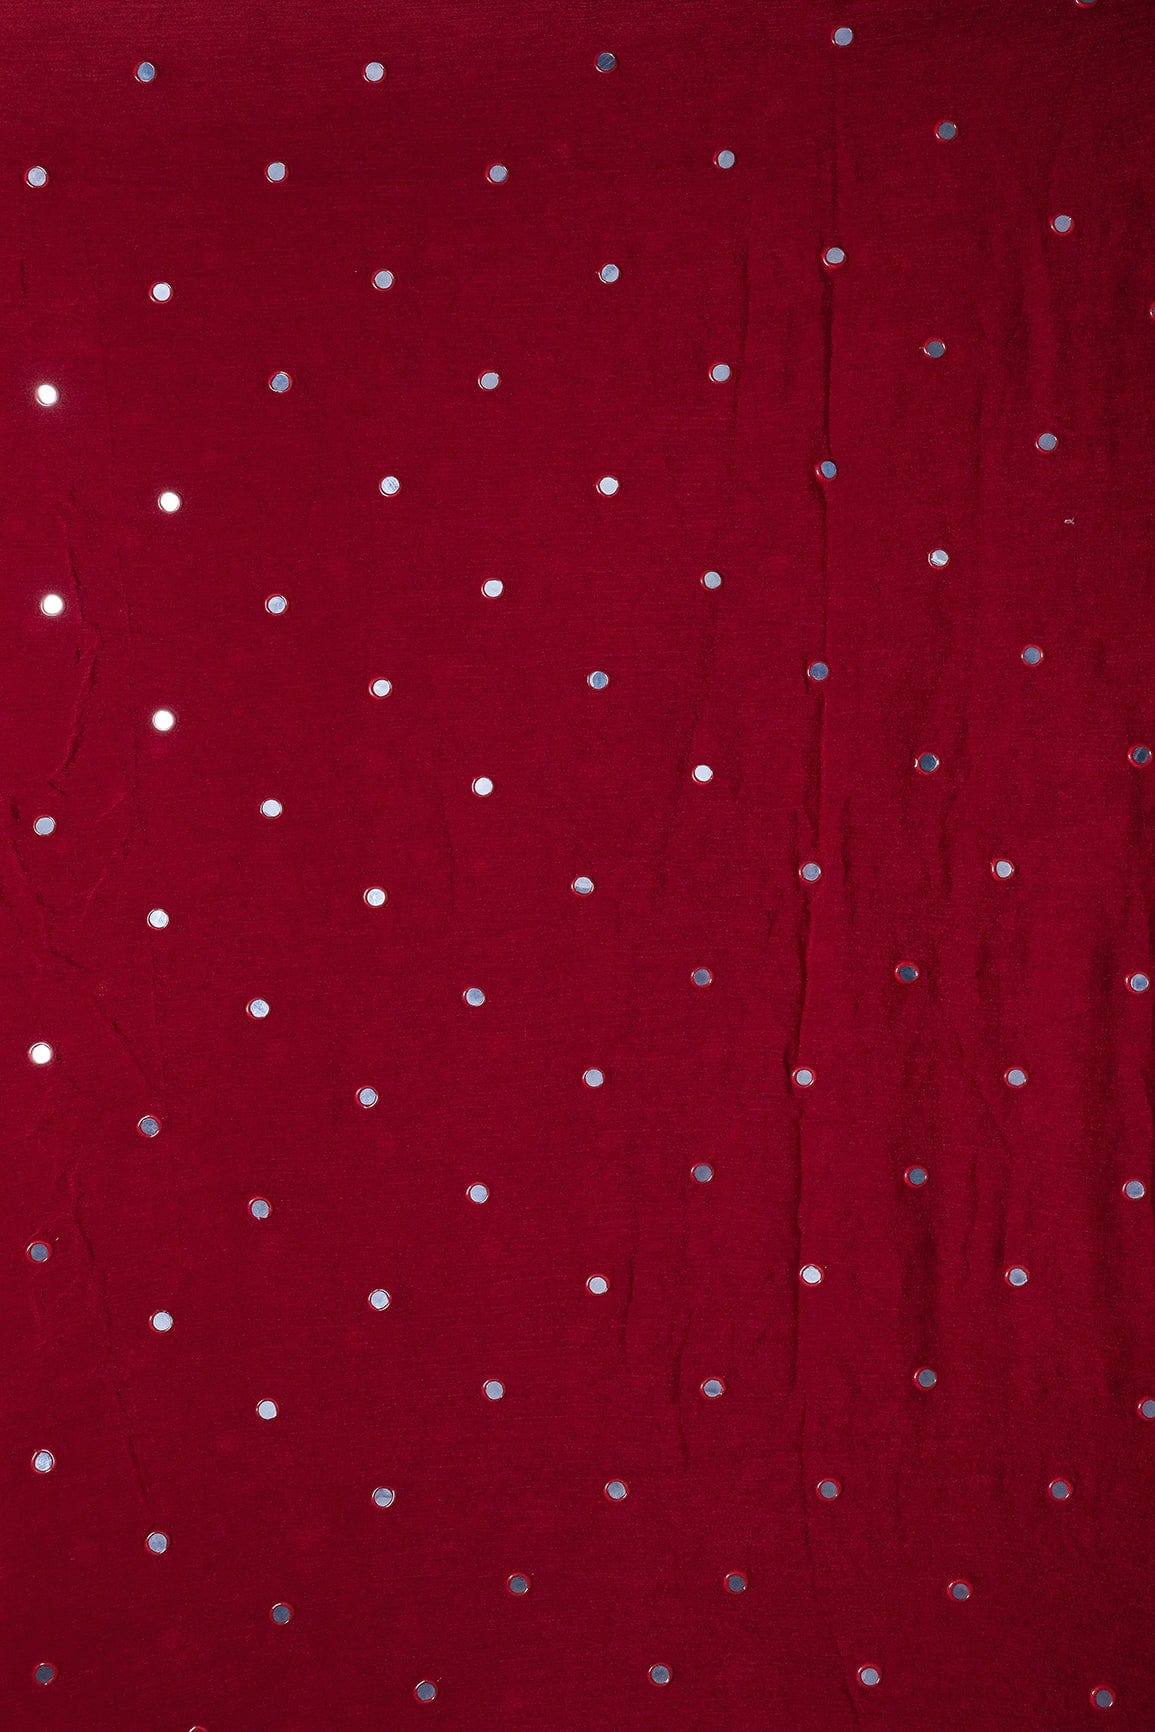 doeraa Embroidery Fabrics Beautiful Mirror Embroidery Work On Red Viscose Chinnon Chiffon Fabric